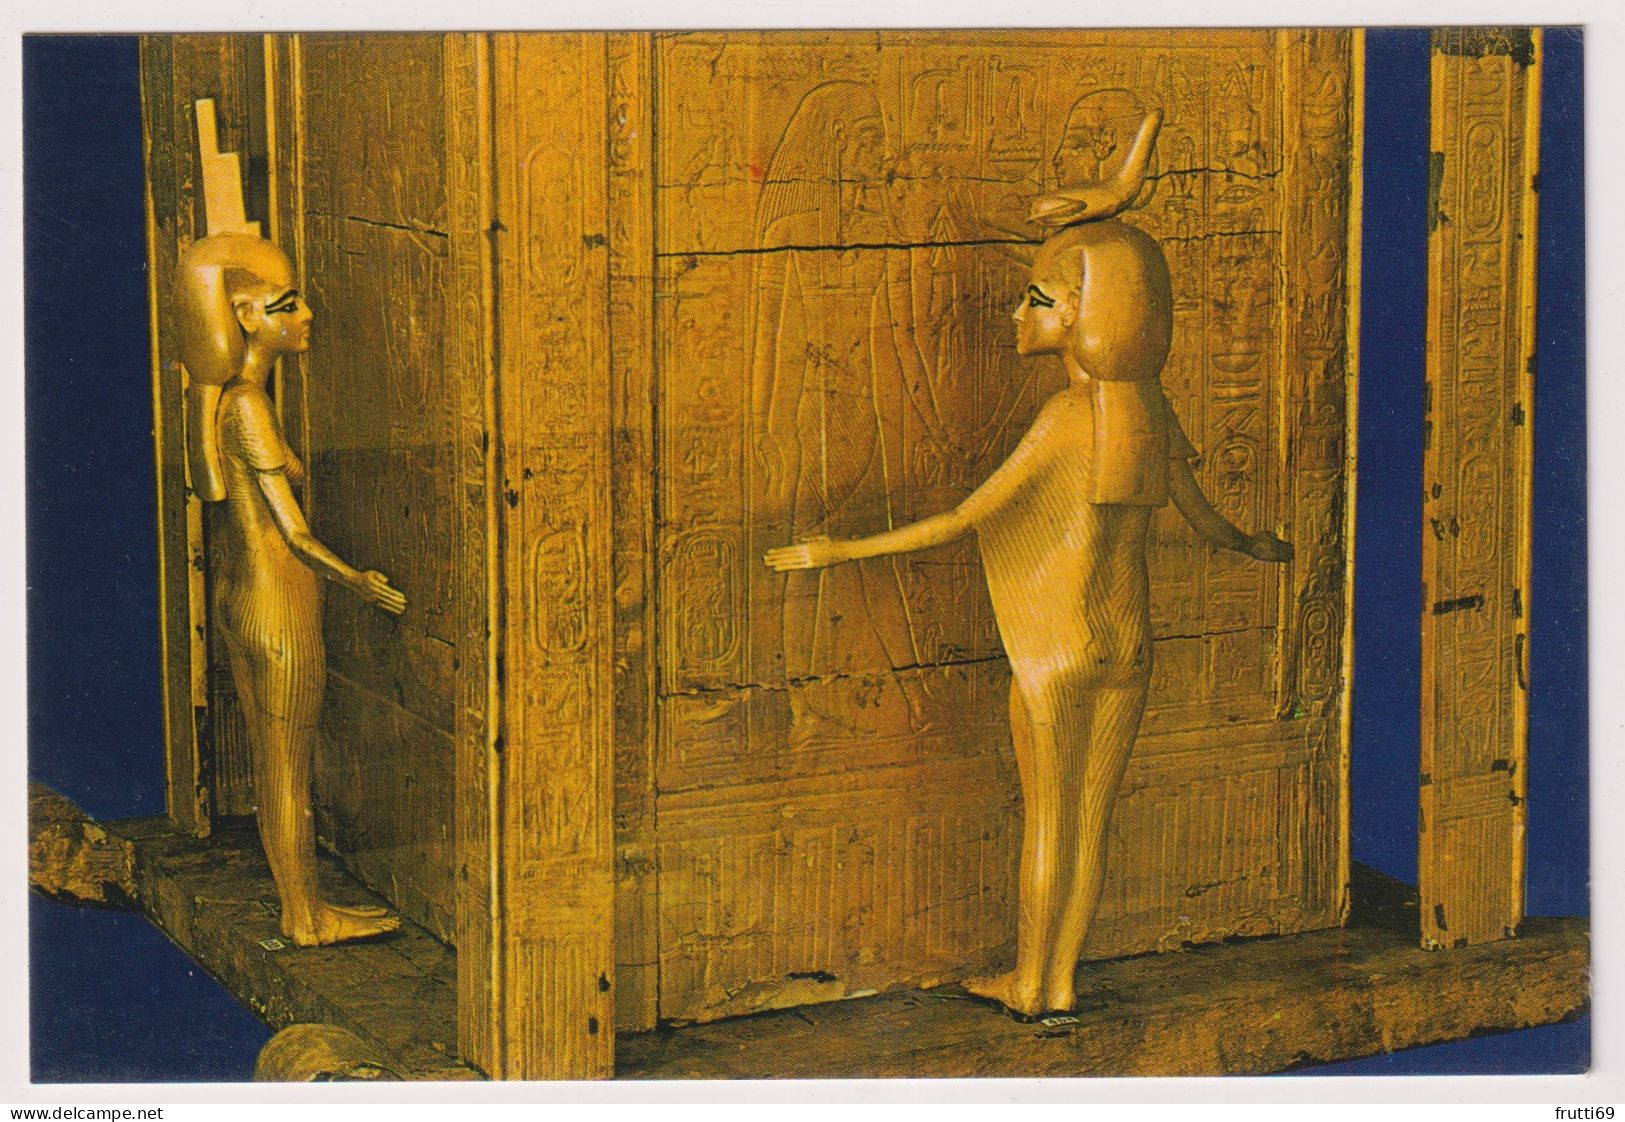 AK 198270 EGYPT -   Cairo - The Egyptian Museum - Tutankhamen's Treasures - Large Gold Canopie Chest - Musei